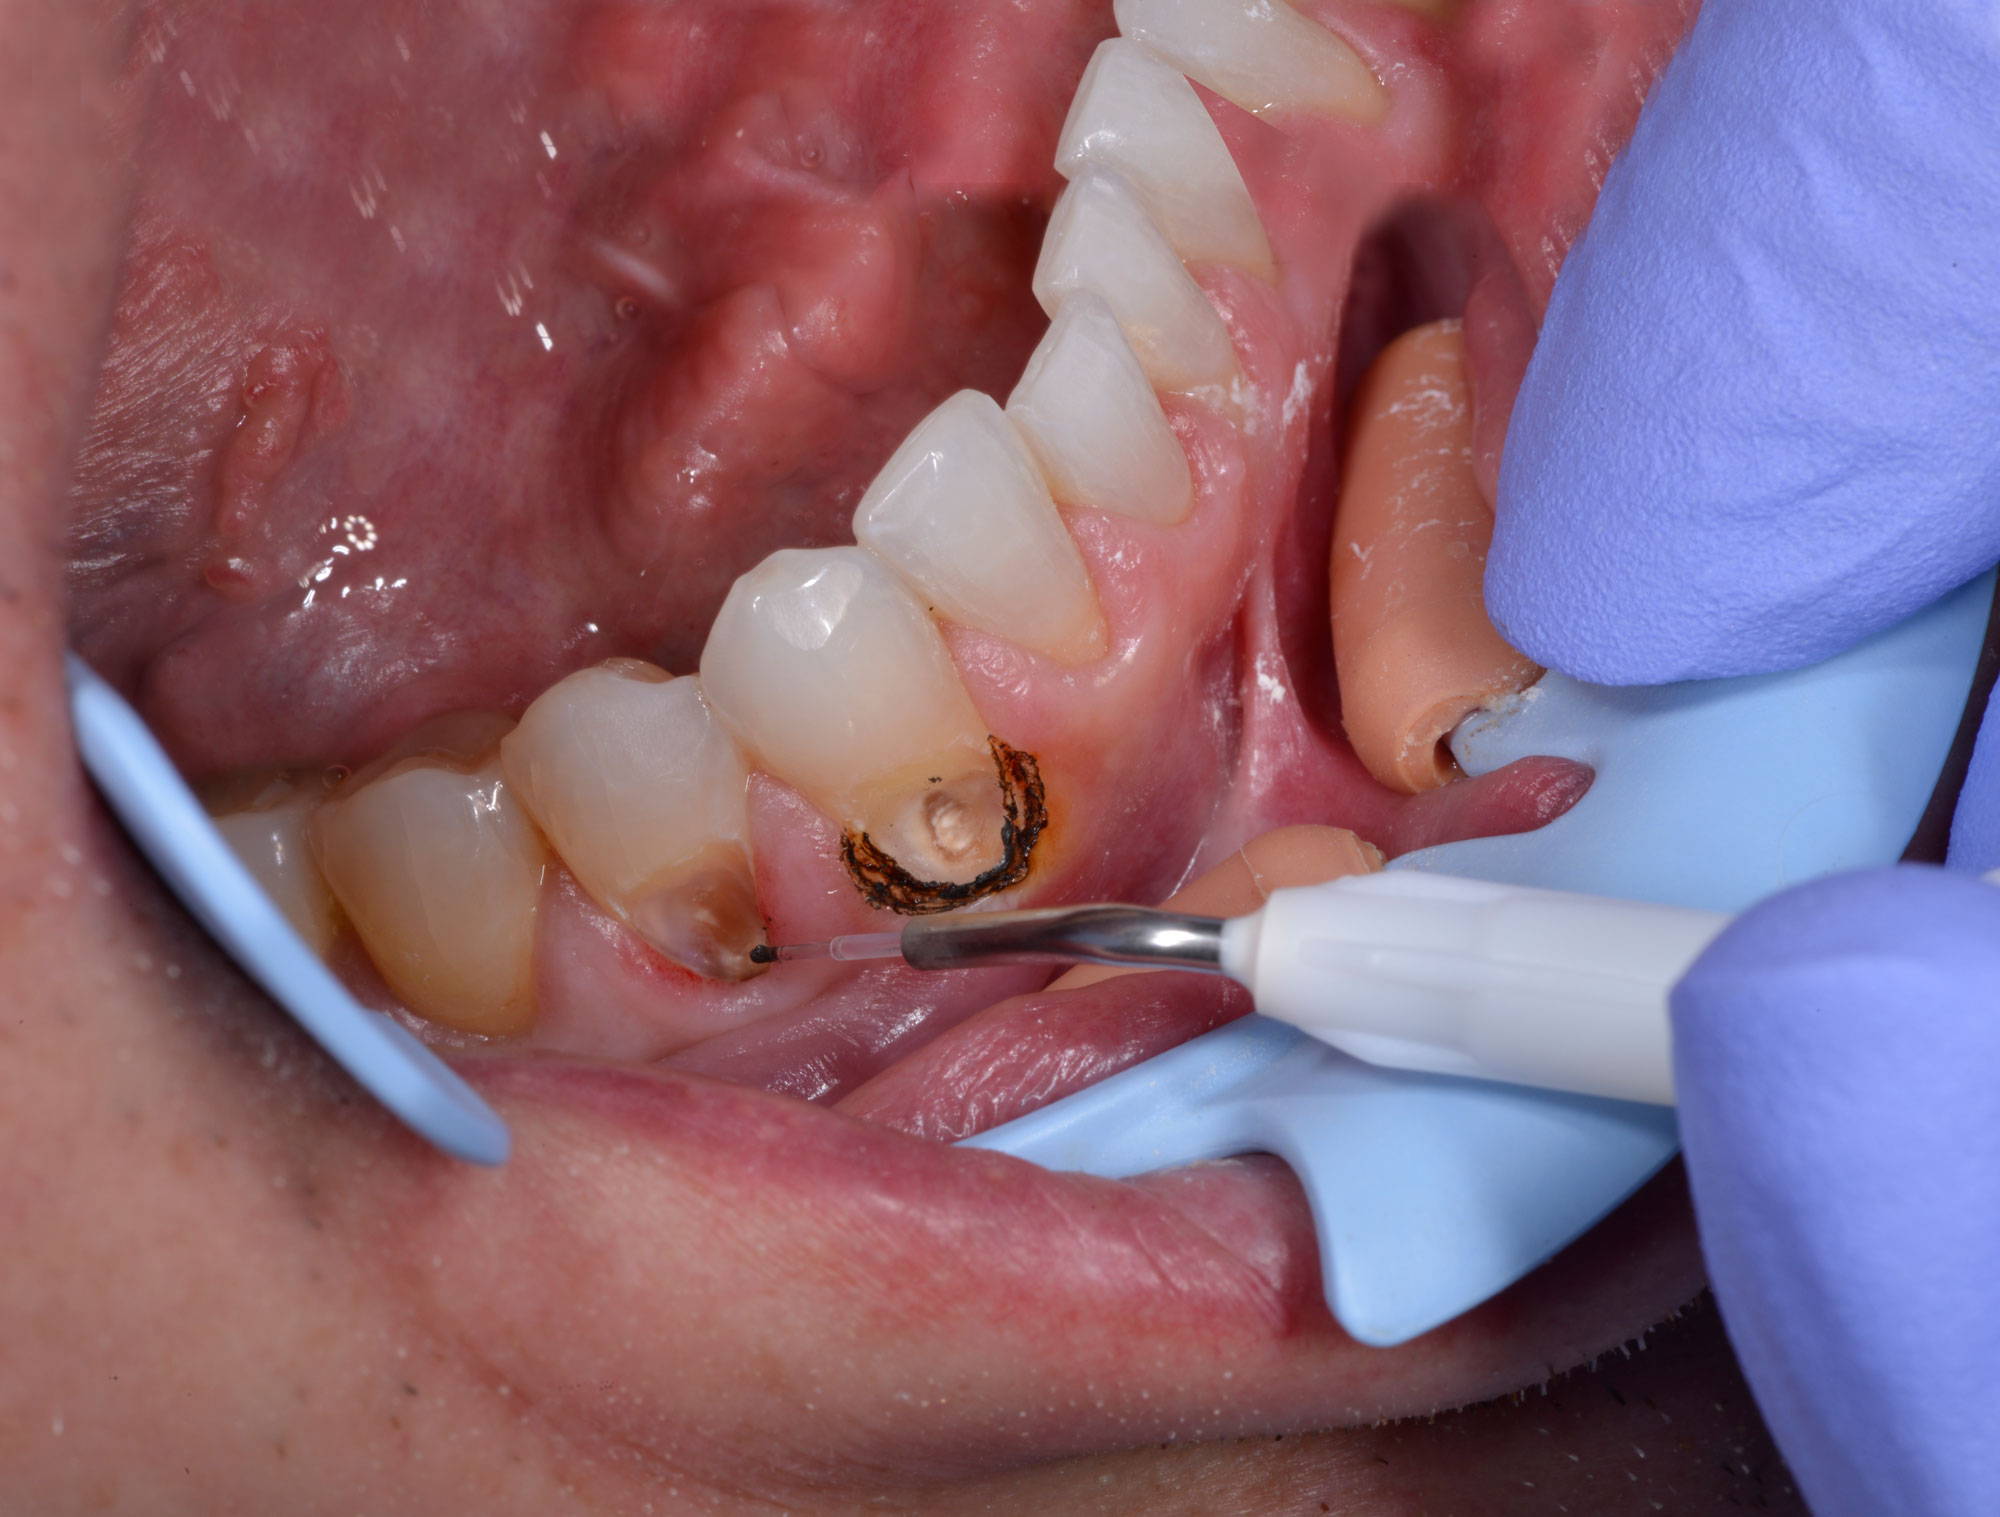 Laser tip touching teeth in subgingival decay